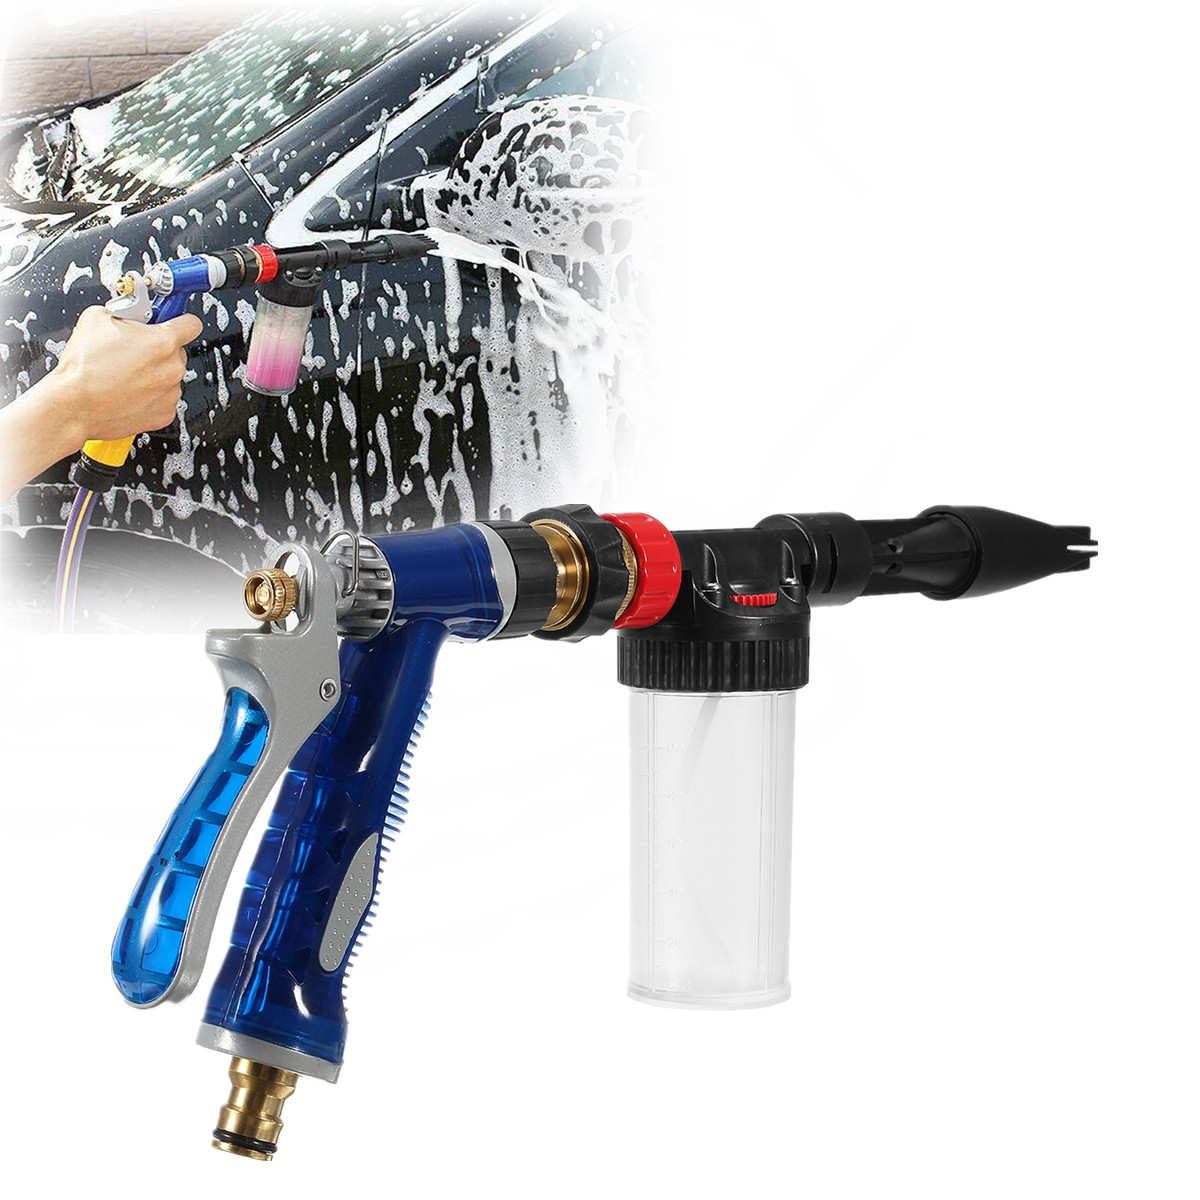 

Adjustable Car Clean Pressure Washer Foamaster Soap Snow Foam Lance Sprayer Jet